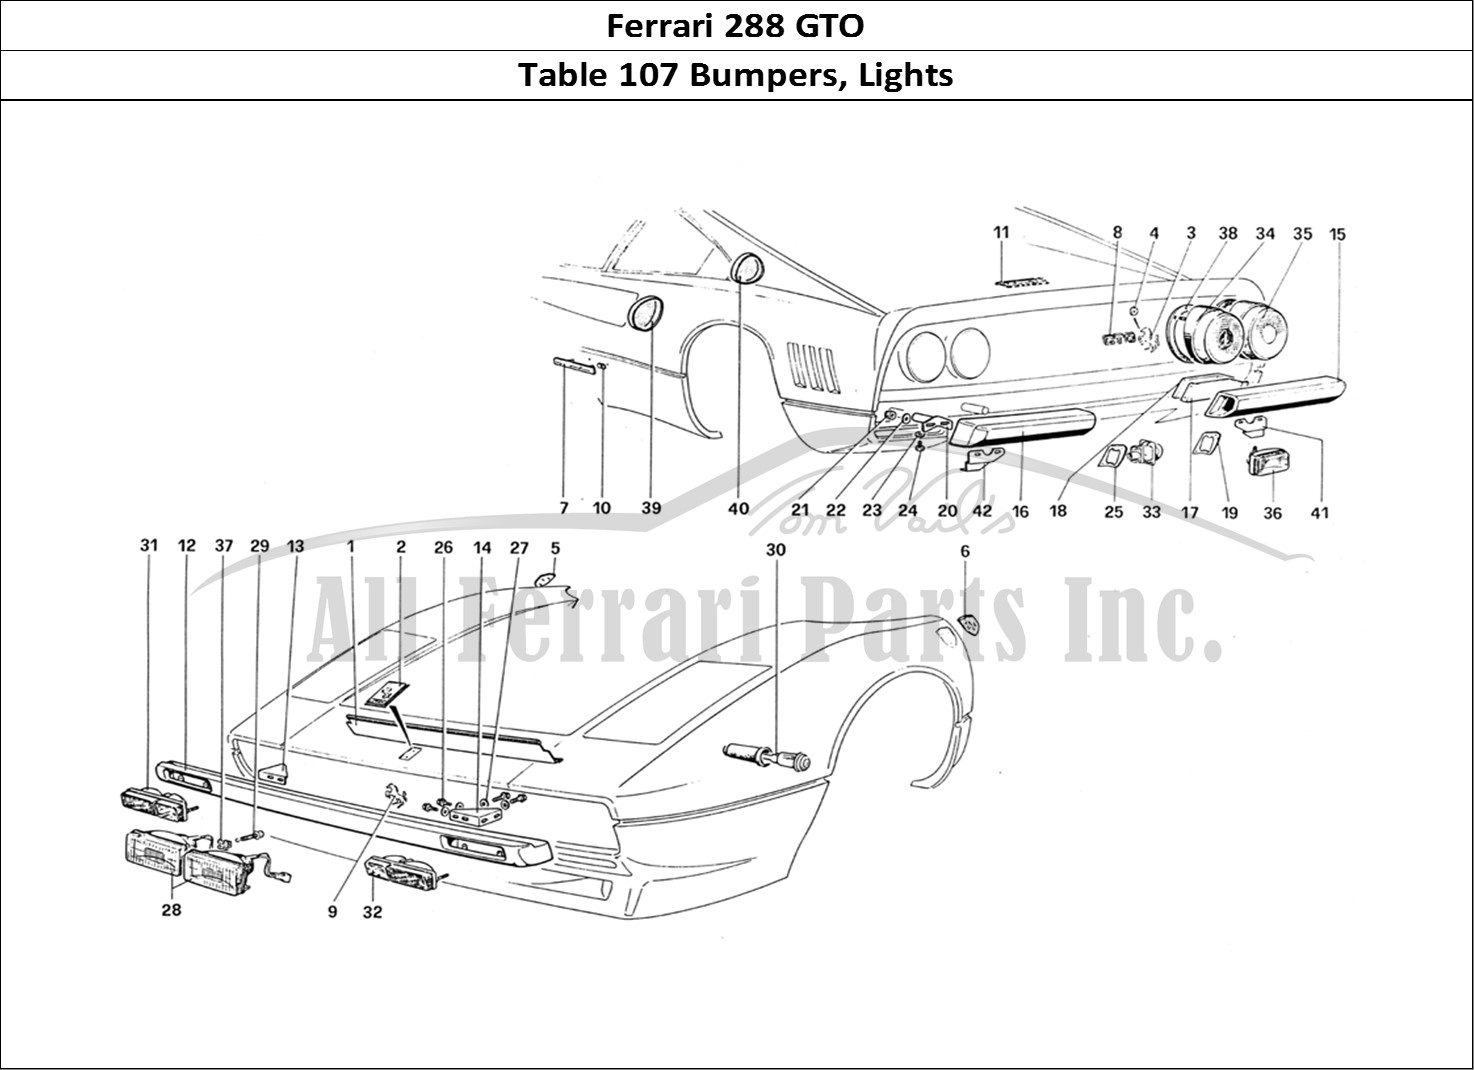 Ferrari Parts Ferrari 288 GTO Page 107 Bumpers - Lights - Outer